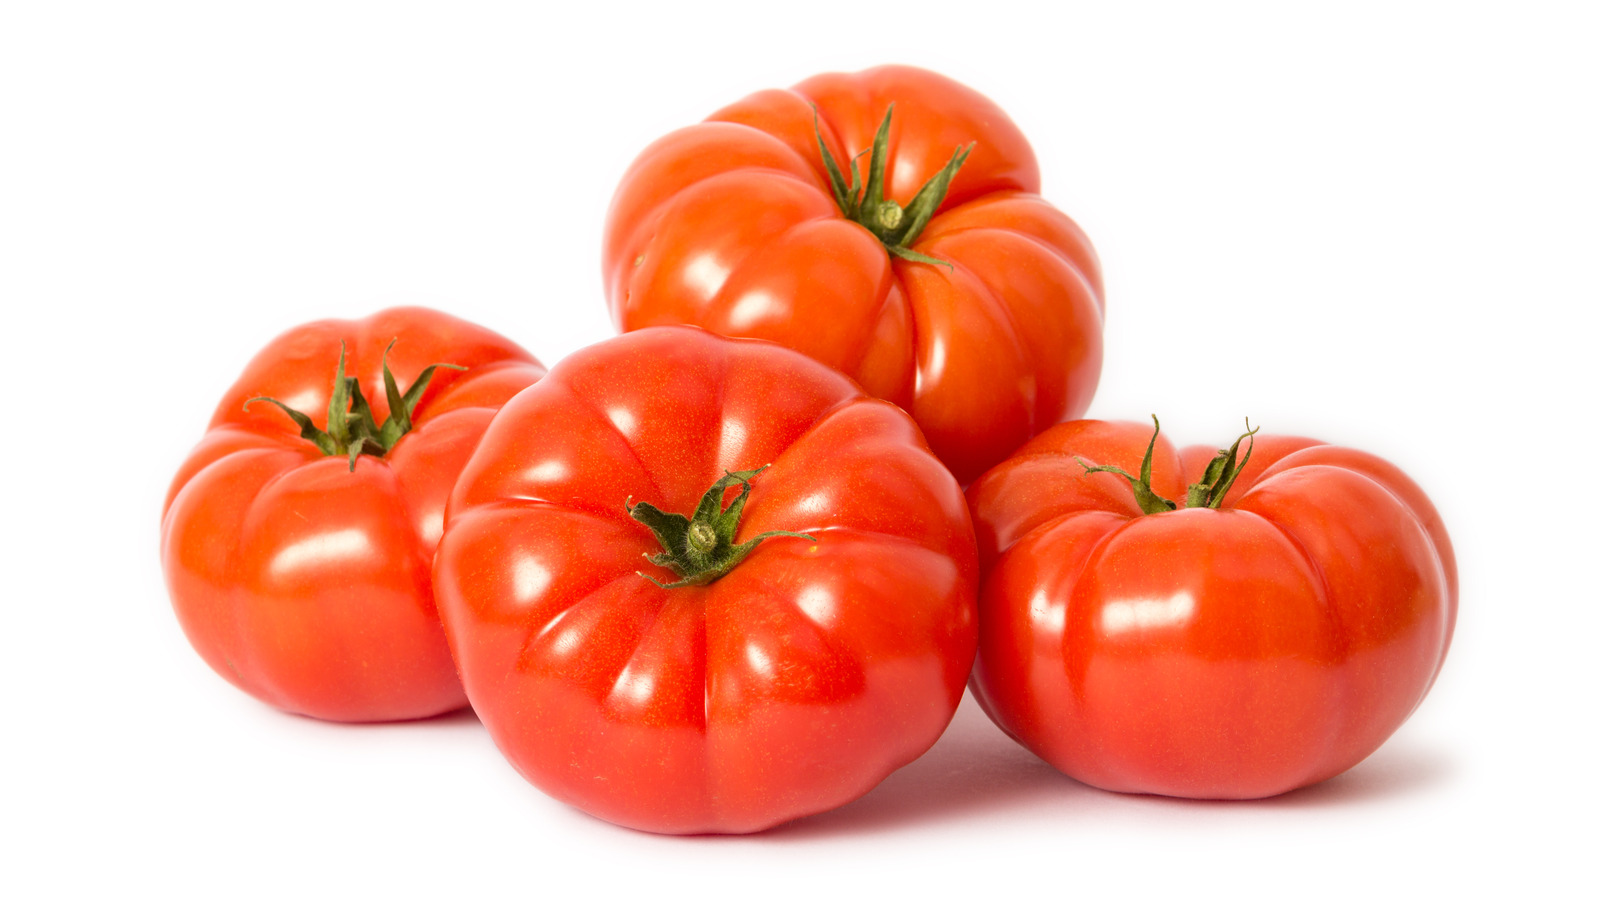 Planting Beefsteak Tomatoes: How To Grow Beefsteak Tomatoes